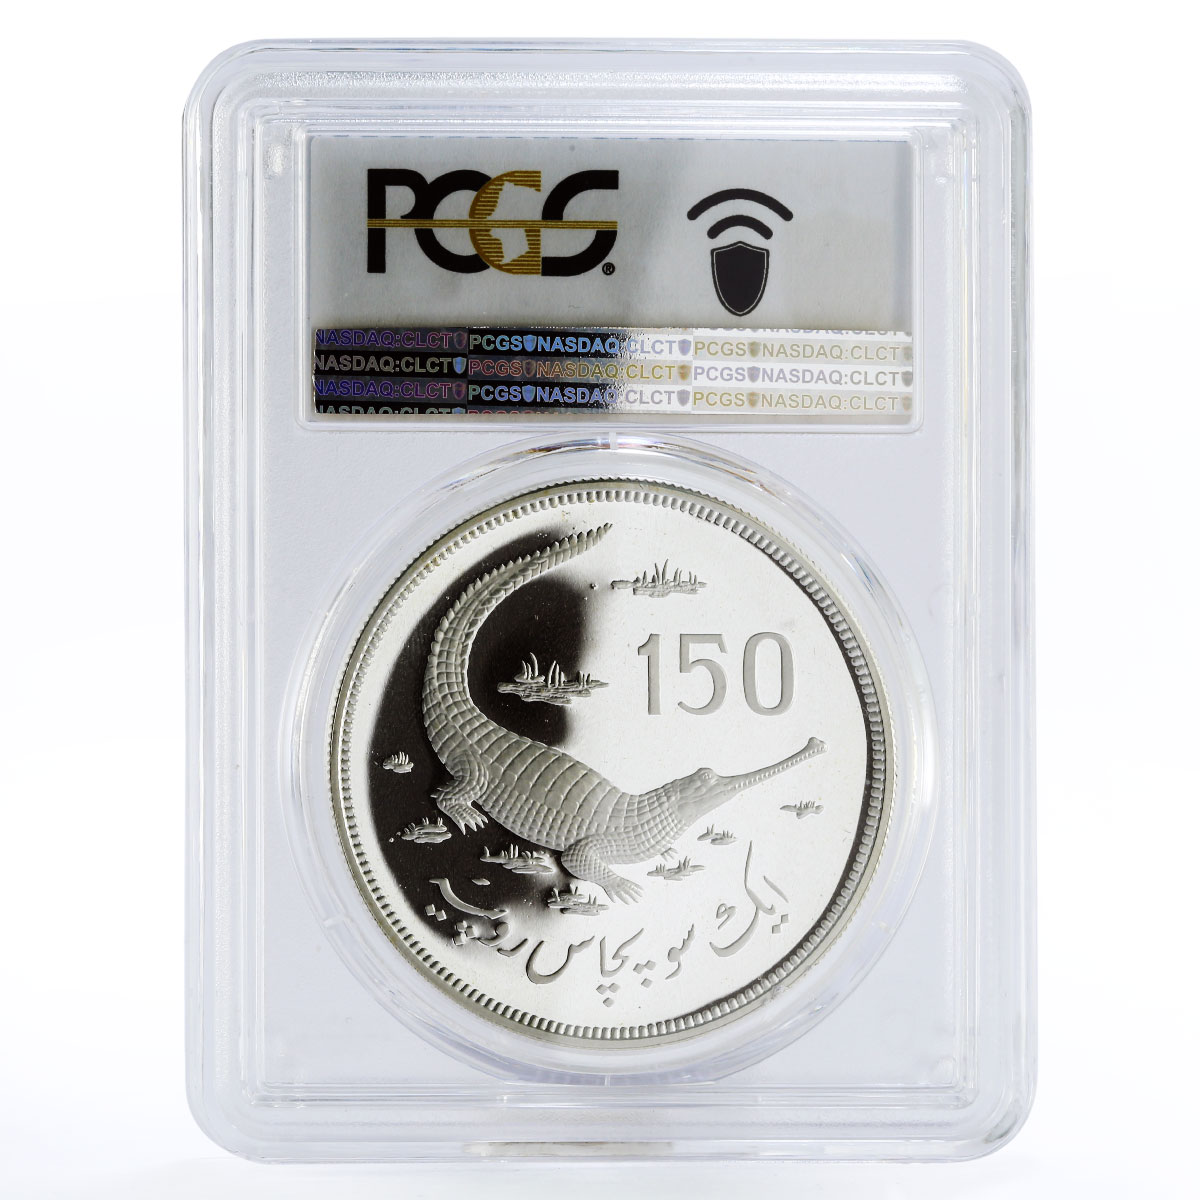 Pakistan 150 rupees WWF series Gavial Crocodile PR67 PCGS silver coin 1976